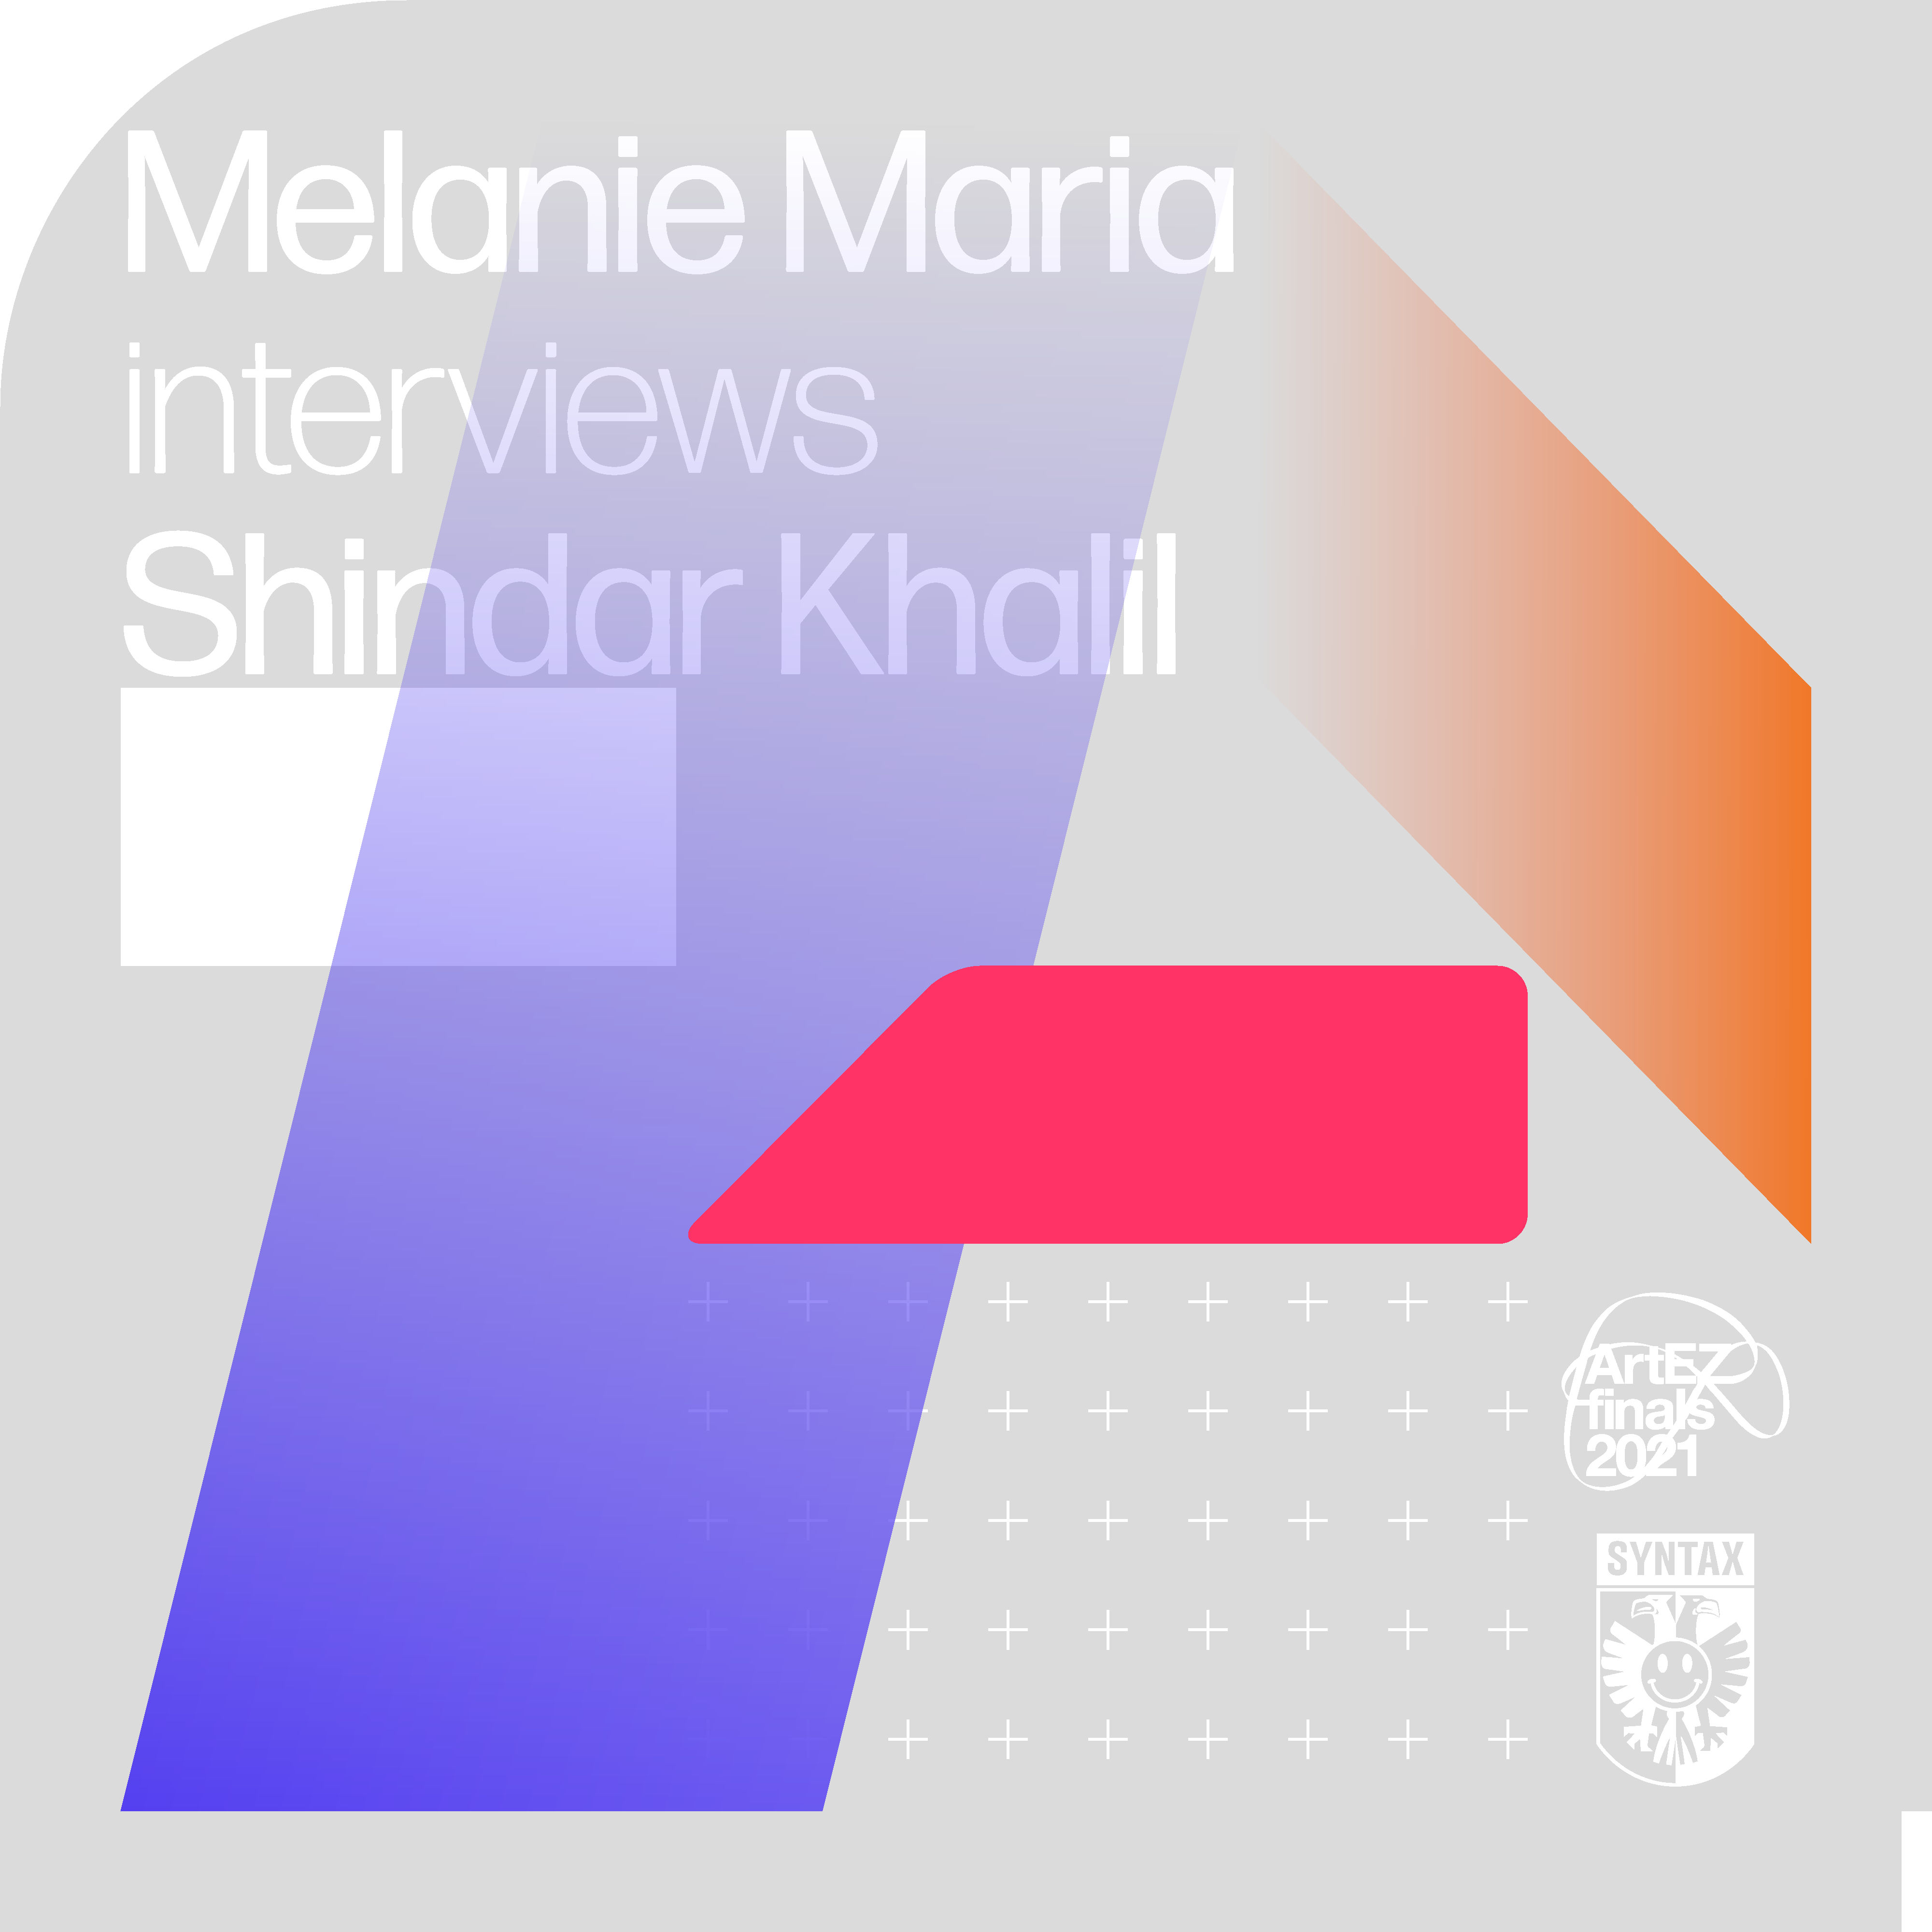 Melanie Maria interviews Shindar Khalil